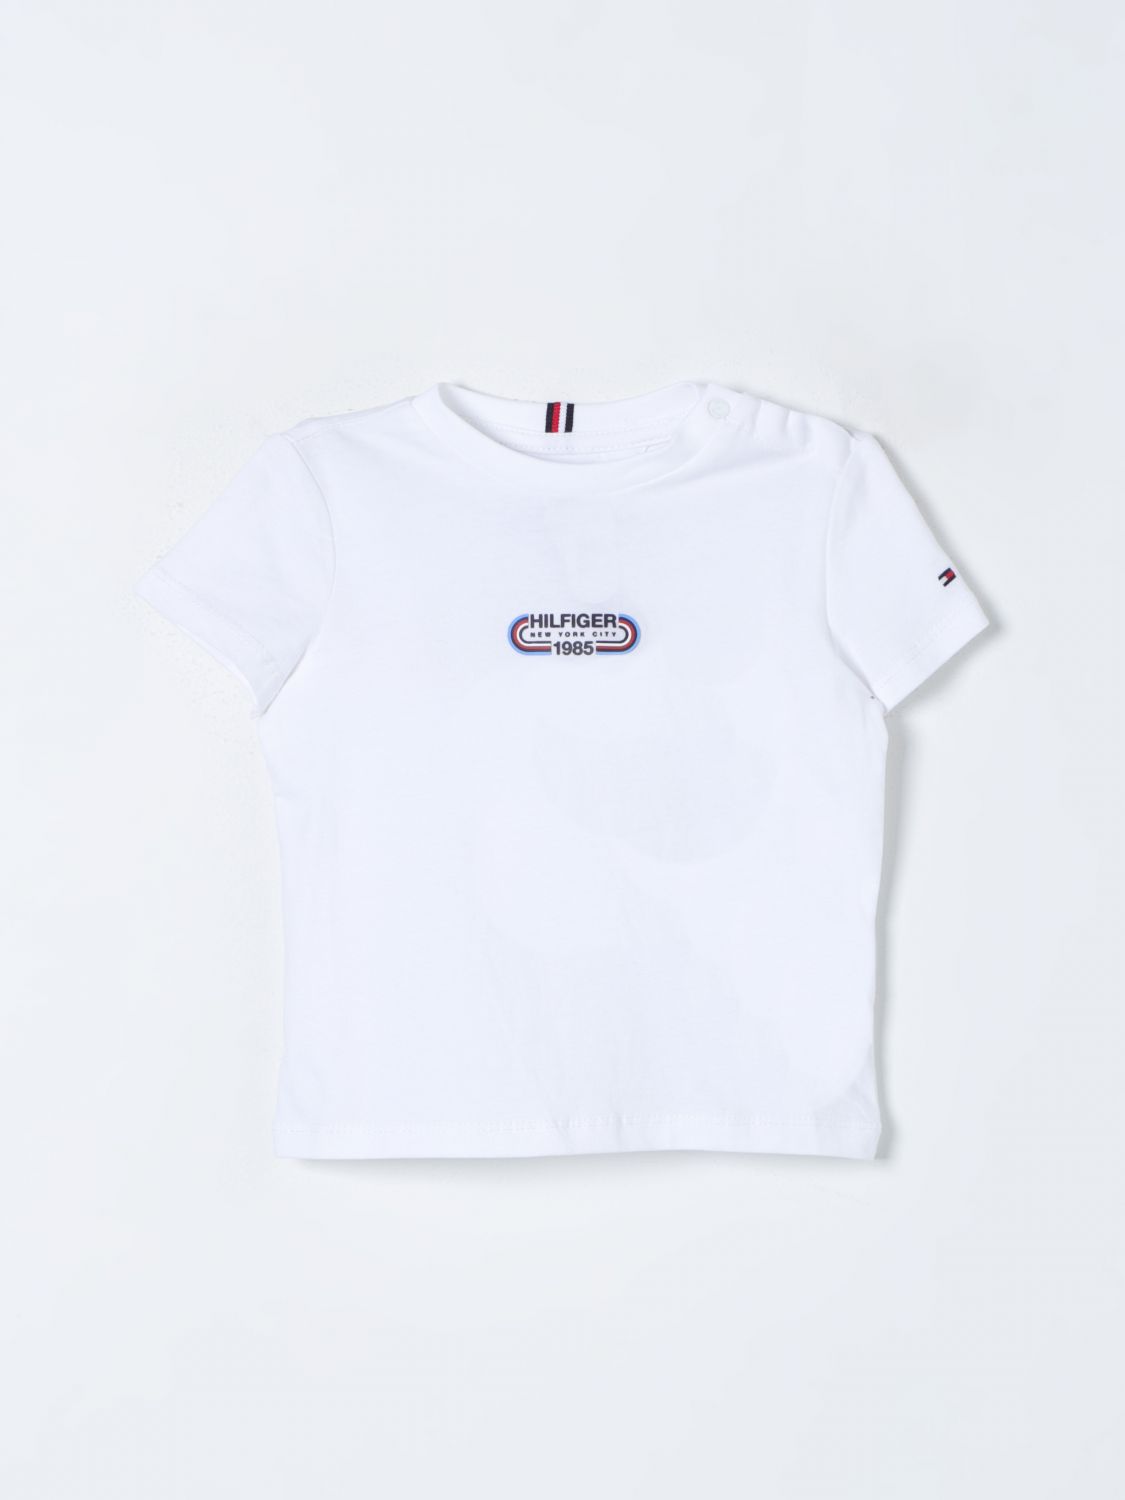 Tommy Hilfiger T-Shirt TOMMY HILFIGER Kids colour White